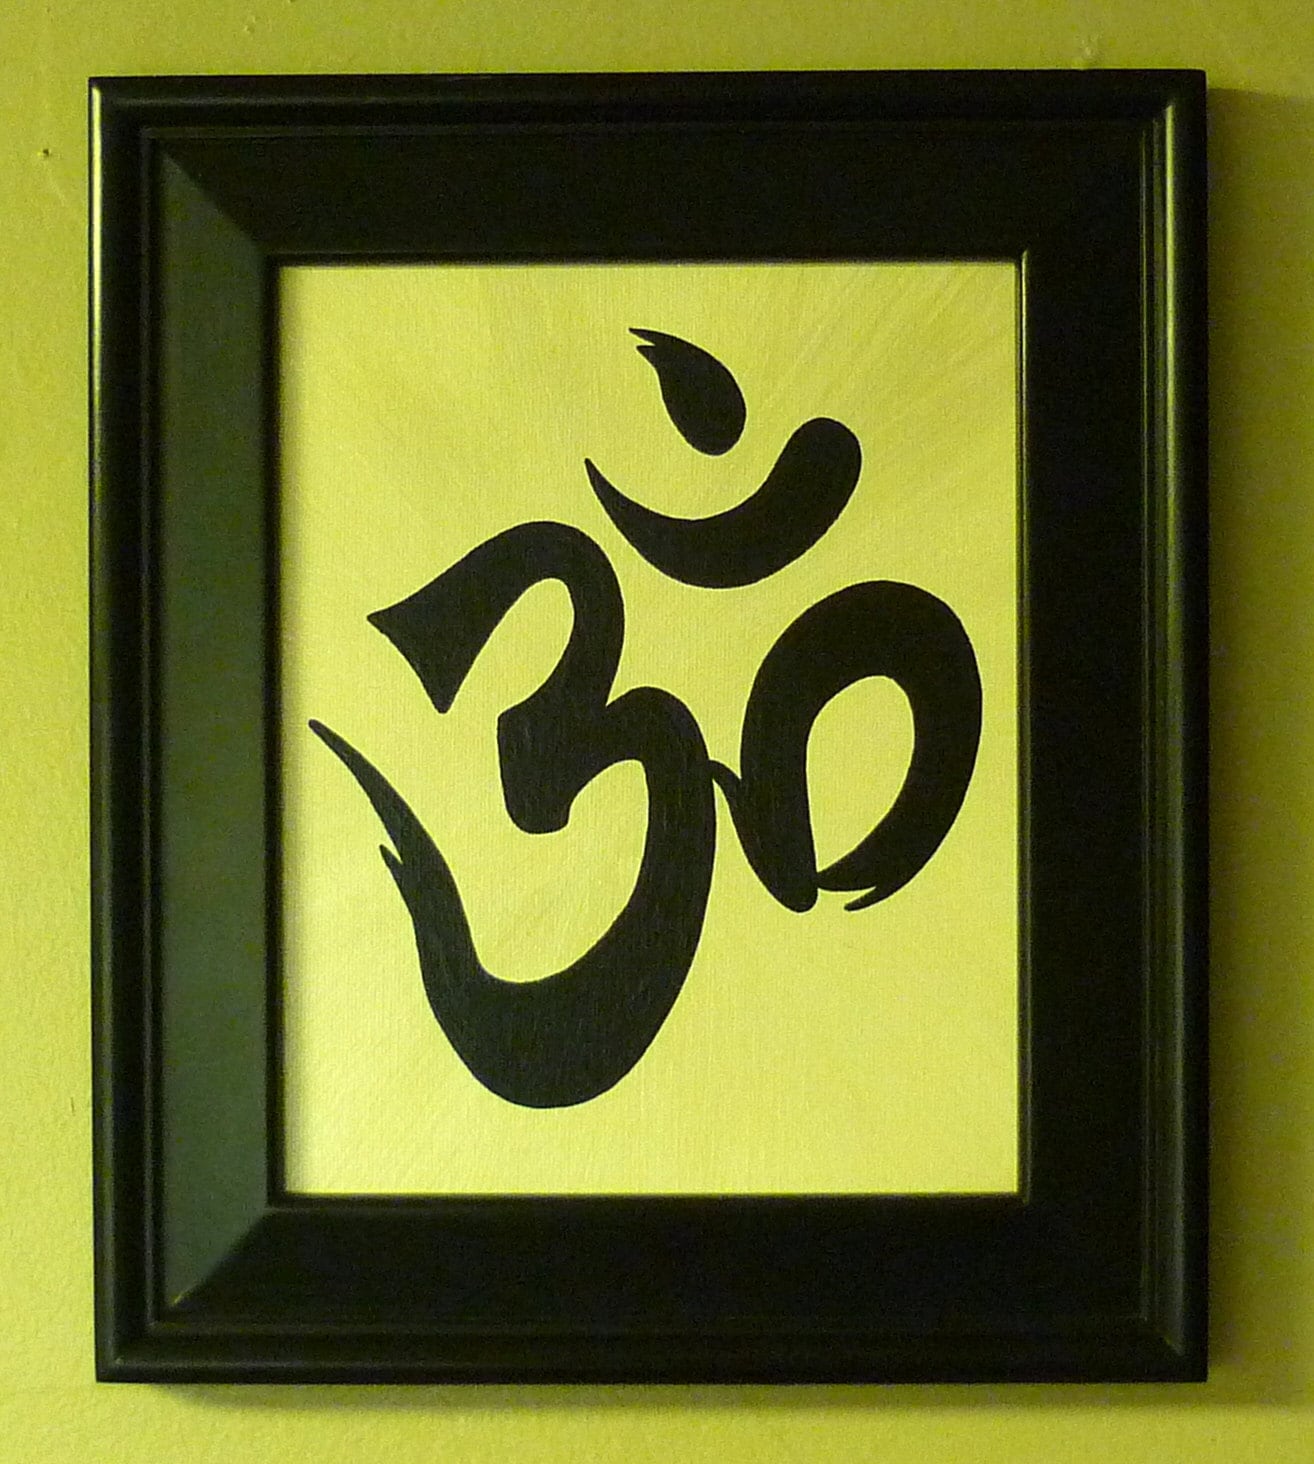 OM Yoga Zen Buddhist Symbol for Meditation by asianartrhrussell